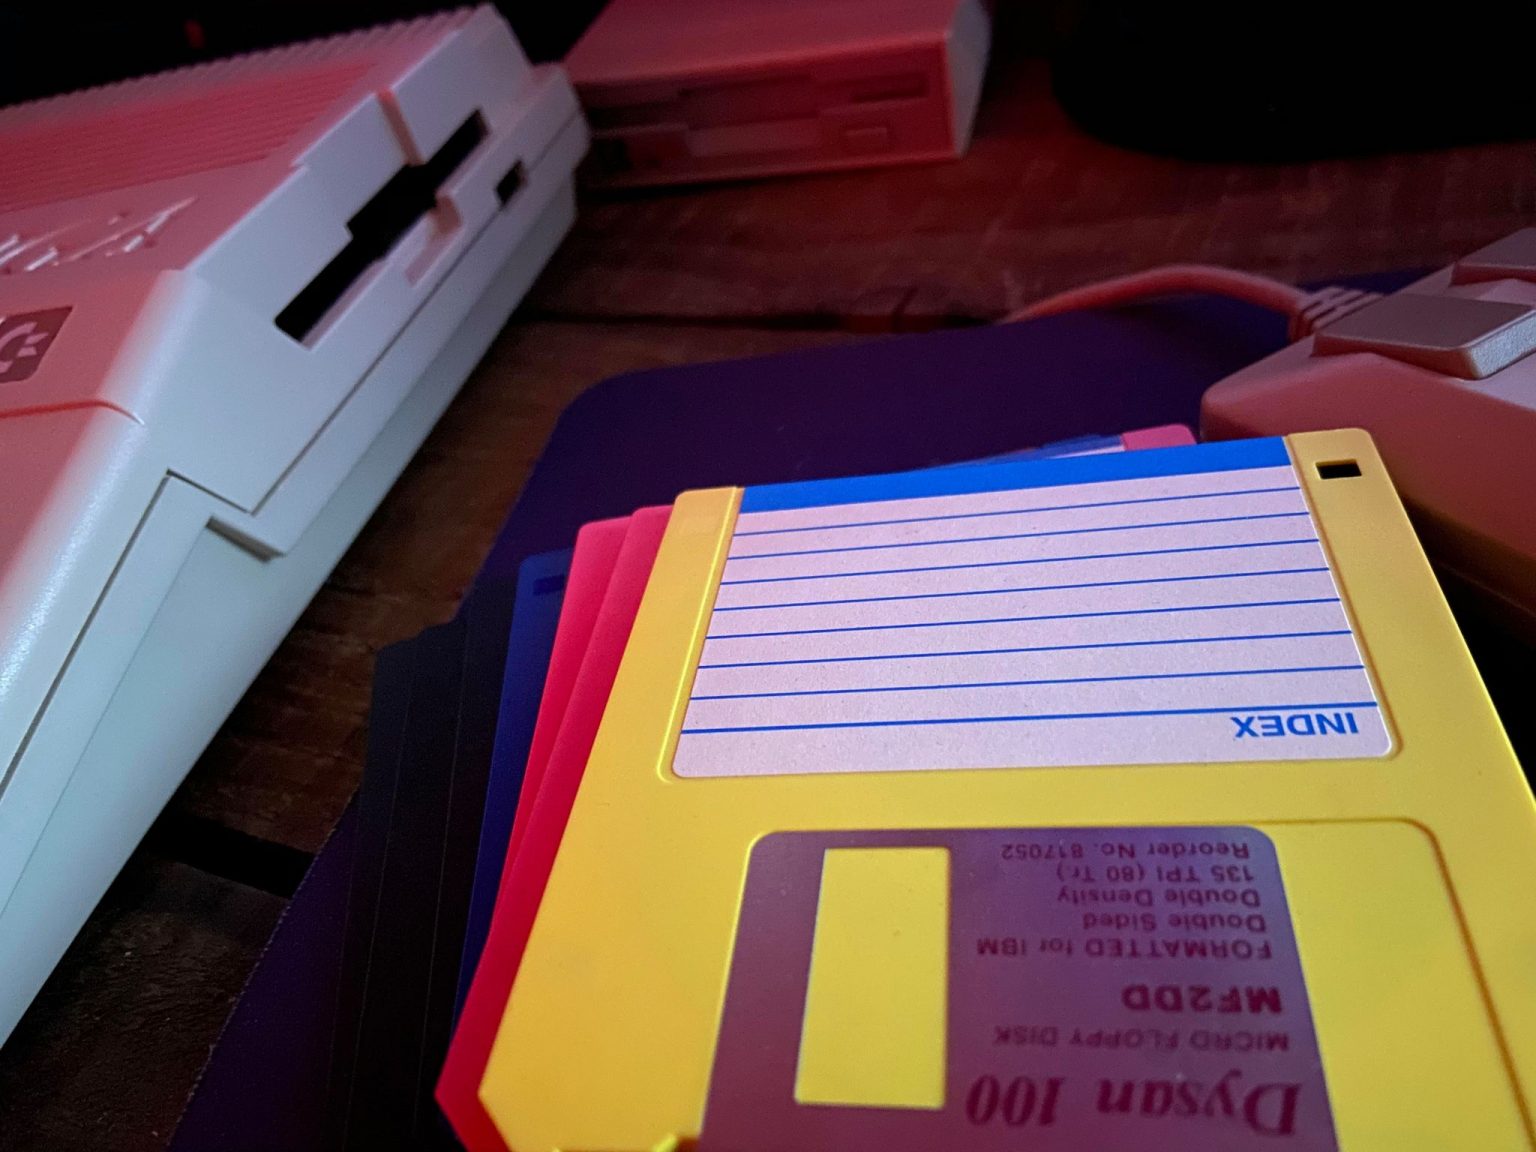 1.44 mb floppy disk image creator